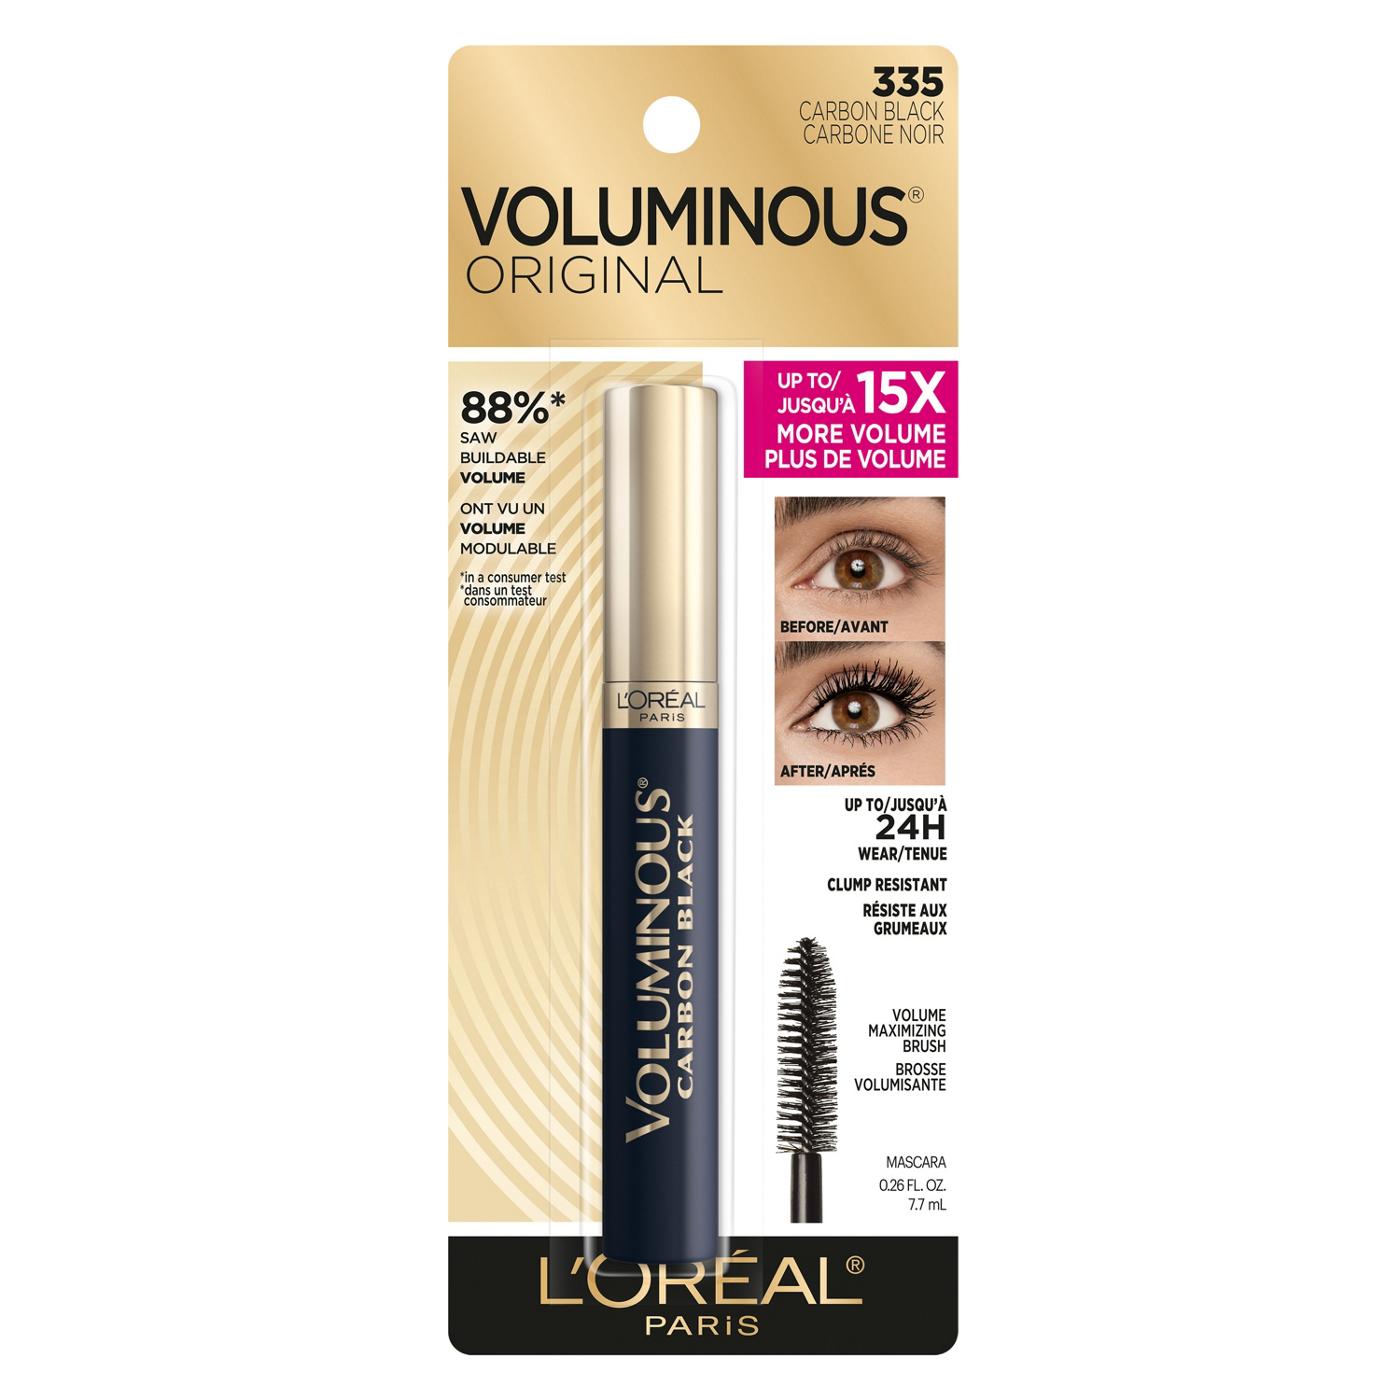 L'Oréal Paris Voluminous Original Bold Eye Mascara - Carbon Black; image 1 of 8